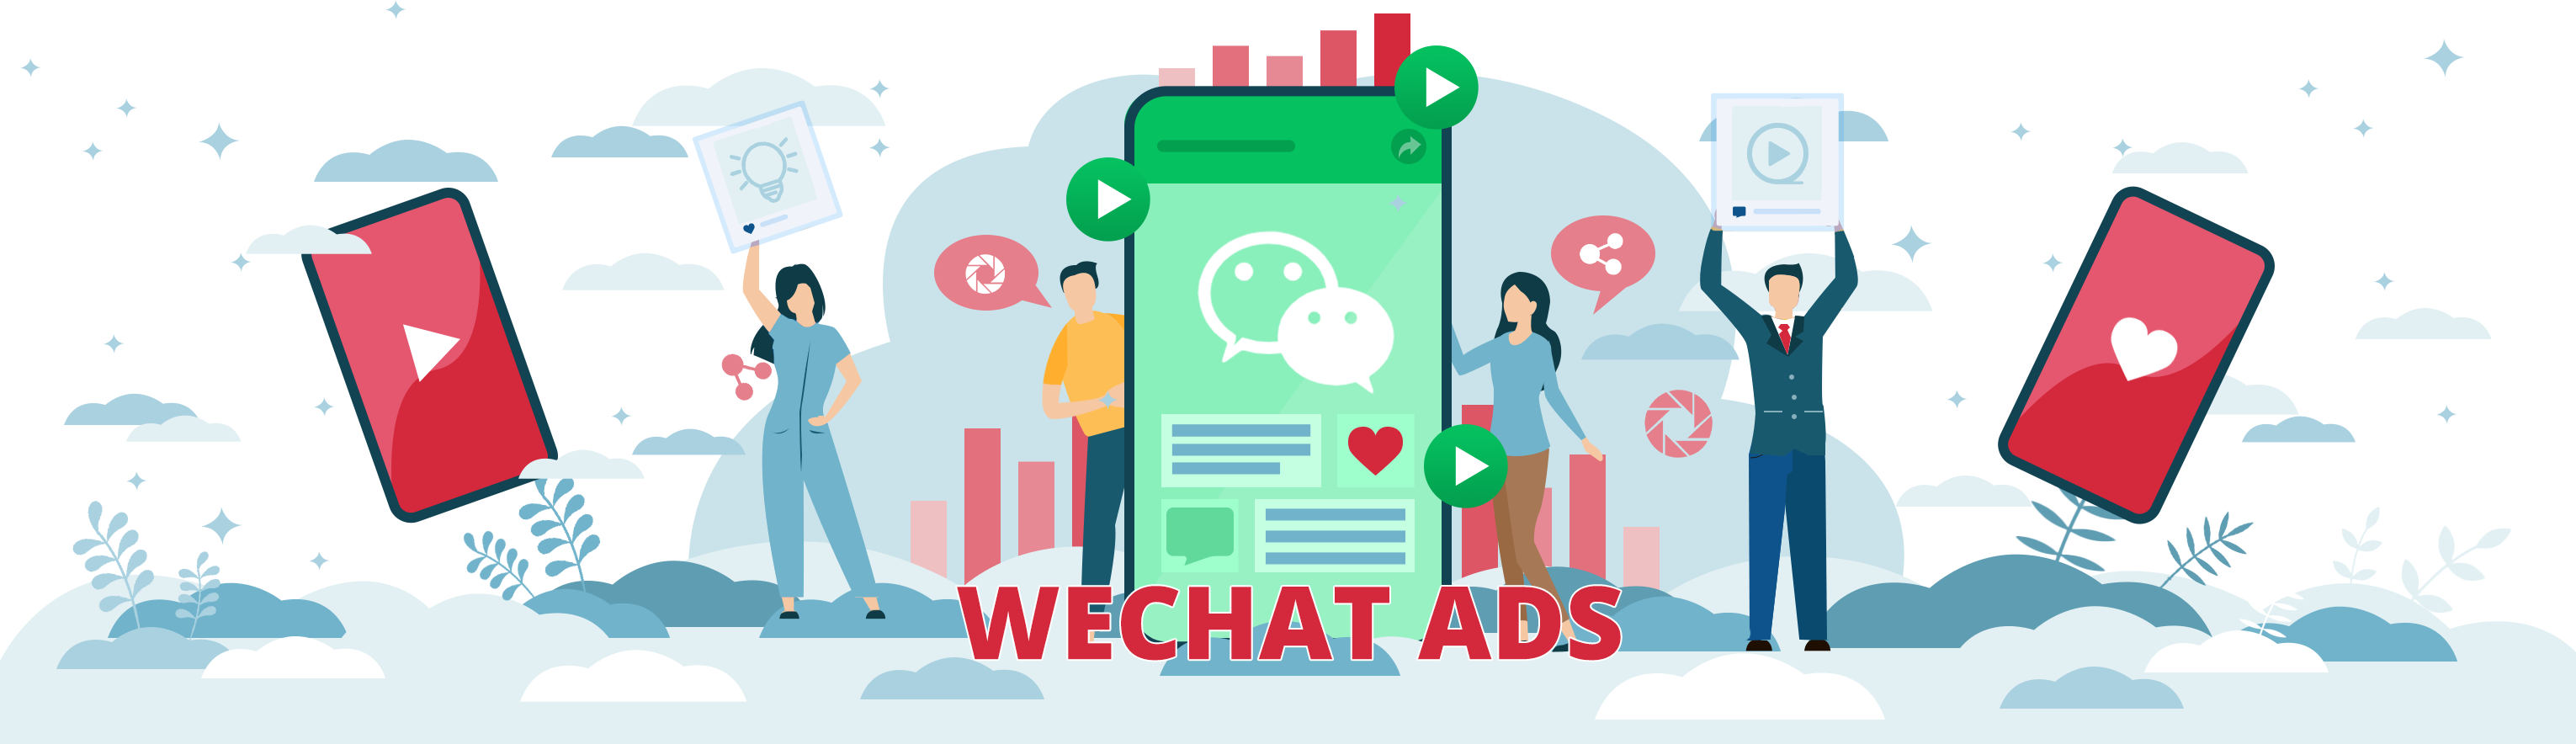 WeChat Marketing in China